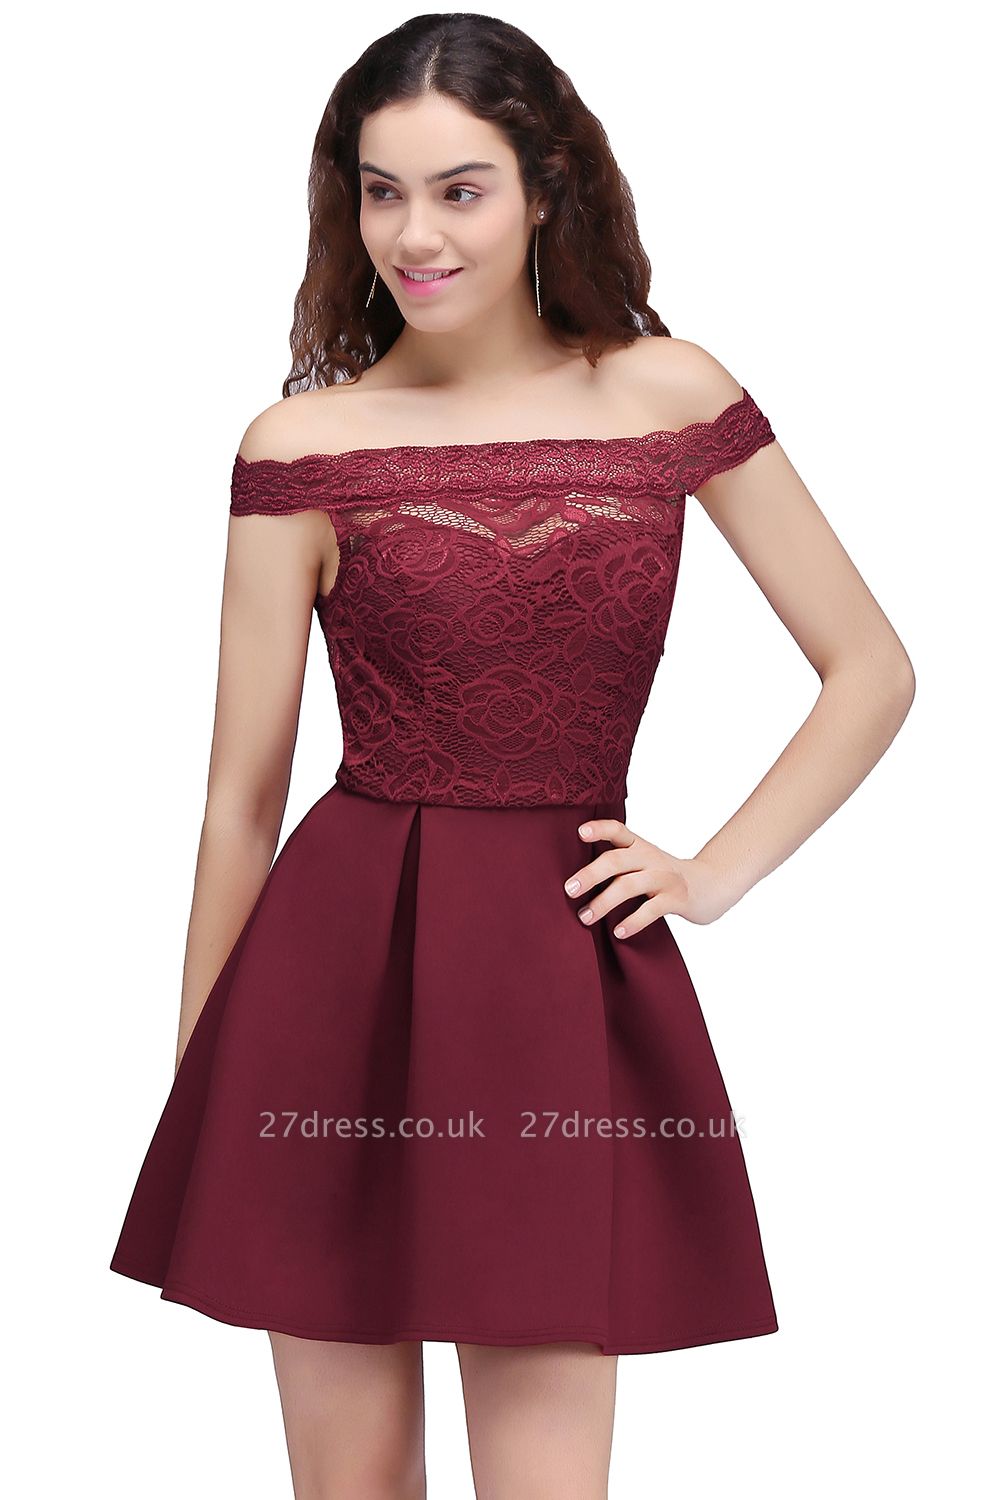 Burgundy Lace A-Line Short Off-the-Shoulder Homecoming Dress UKes UK